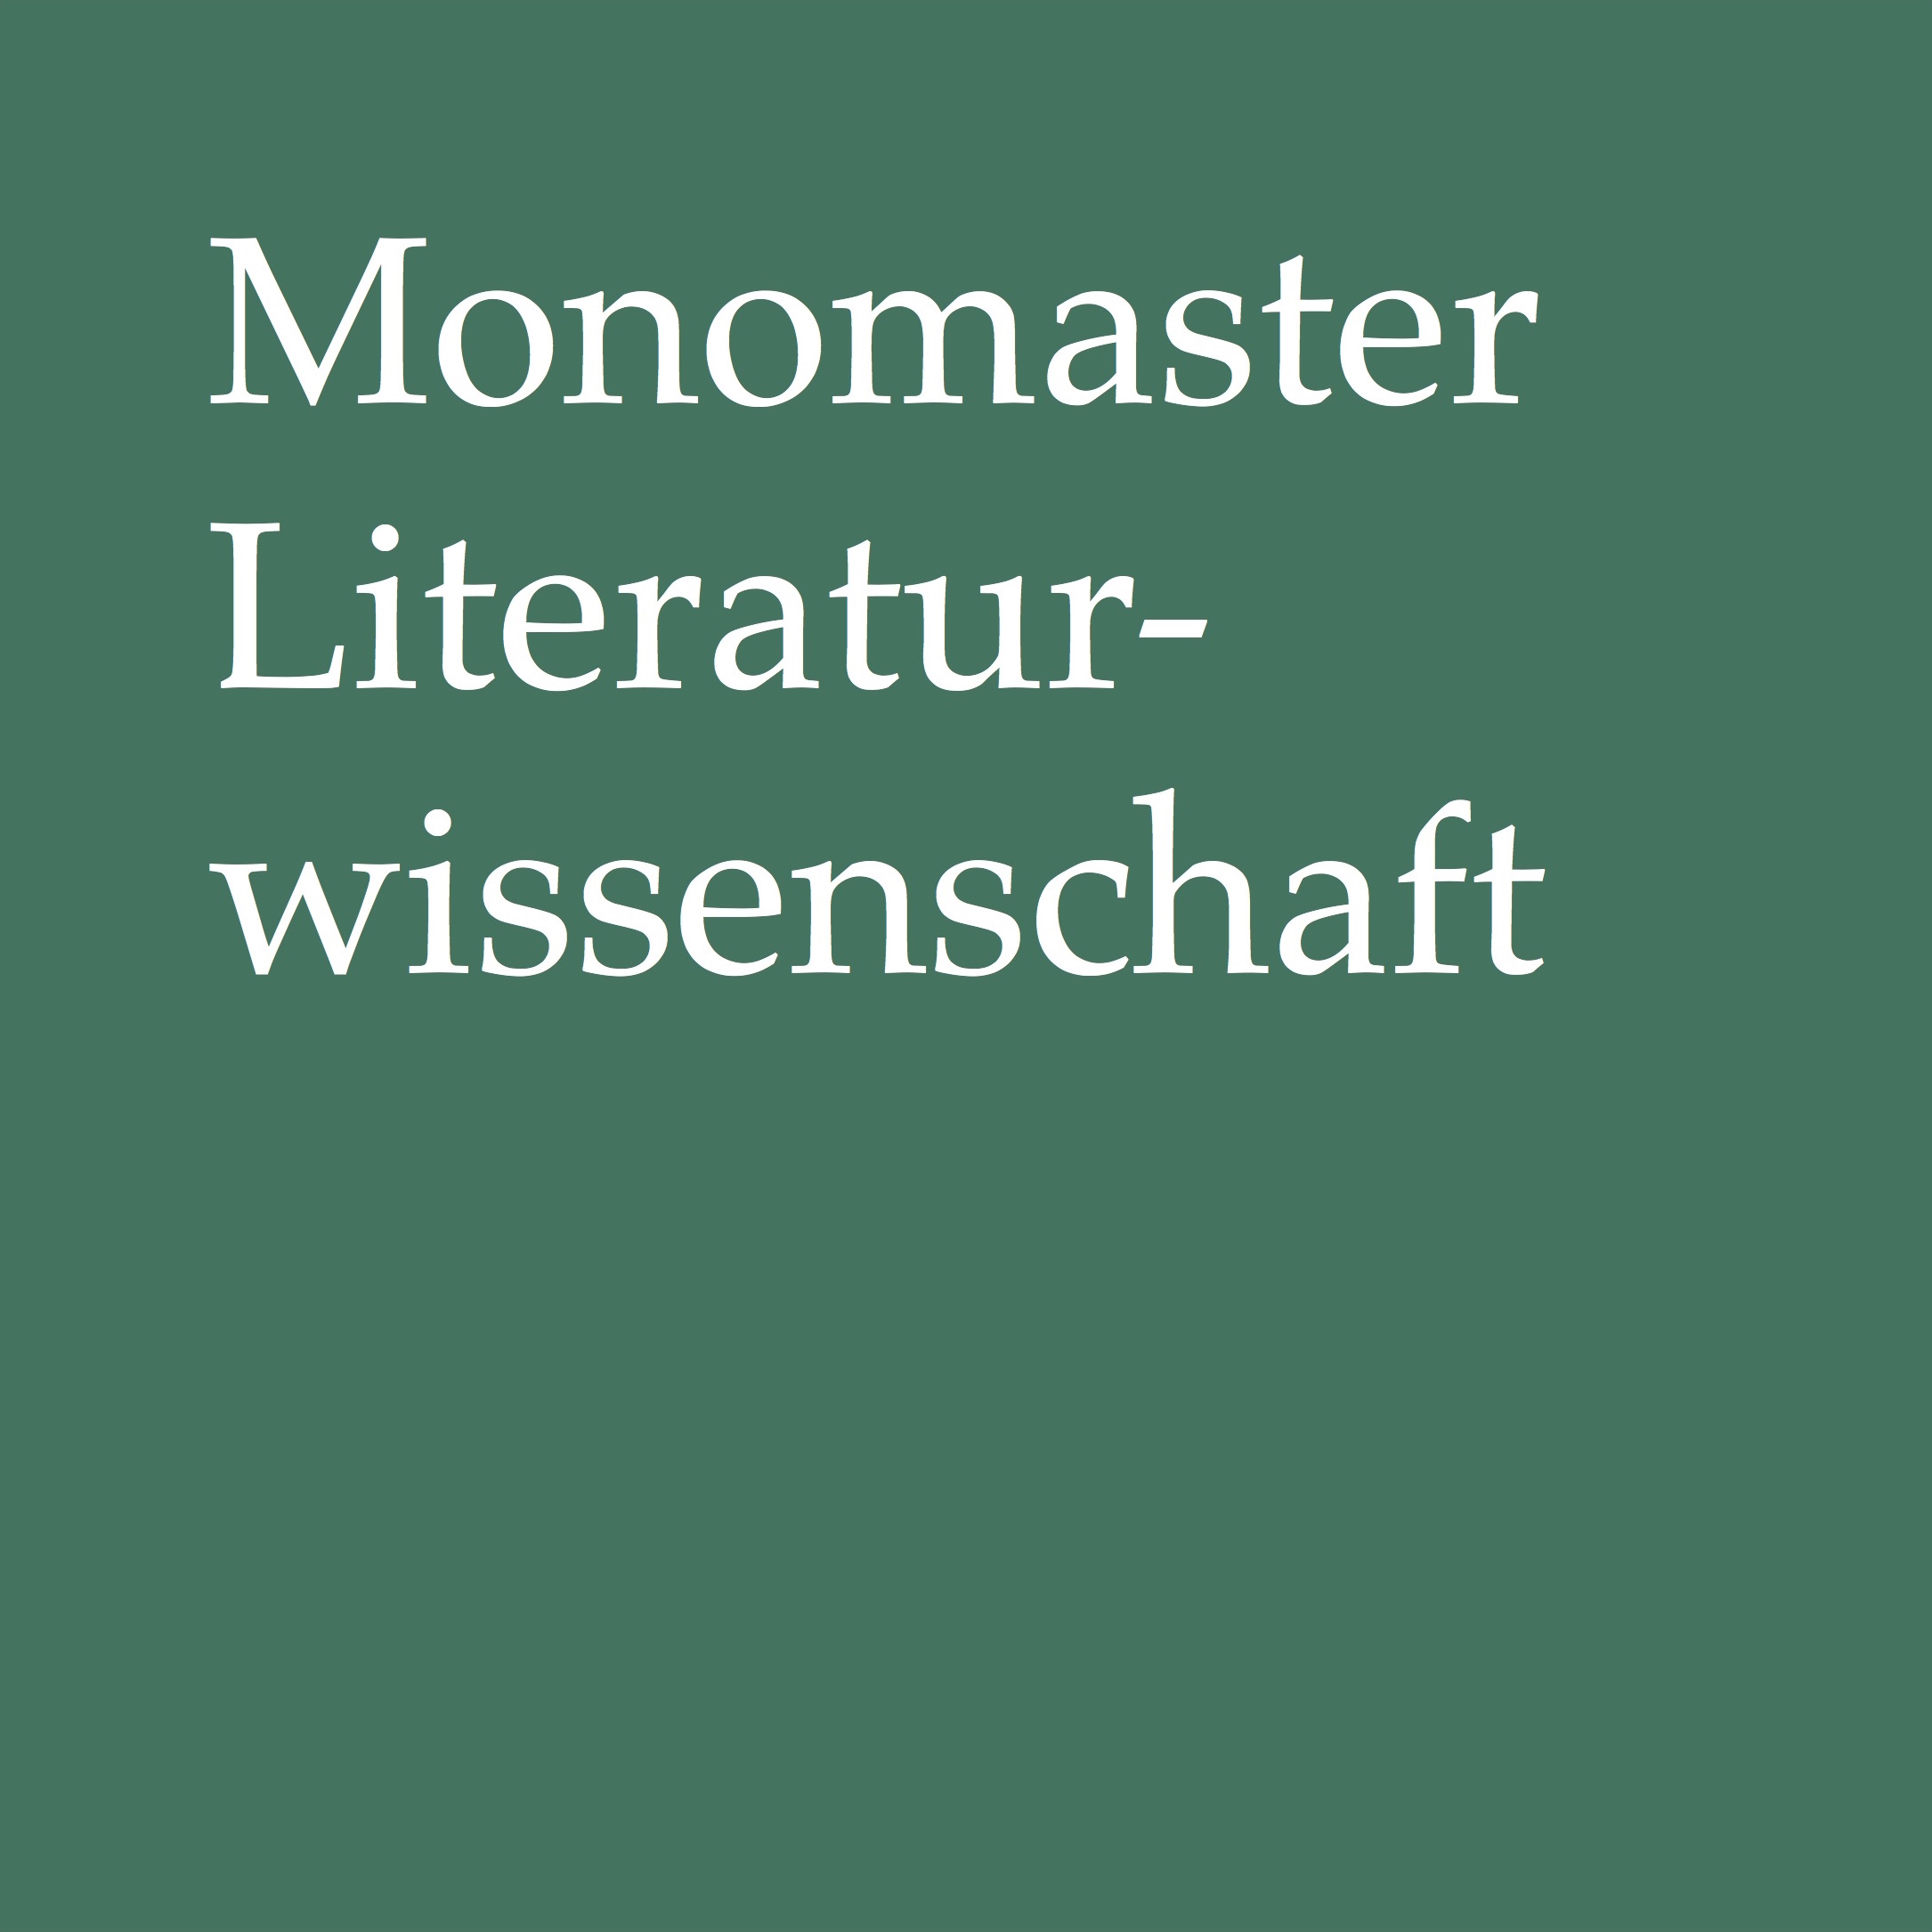 Monomaster letteratura